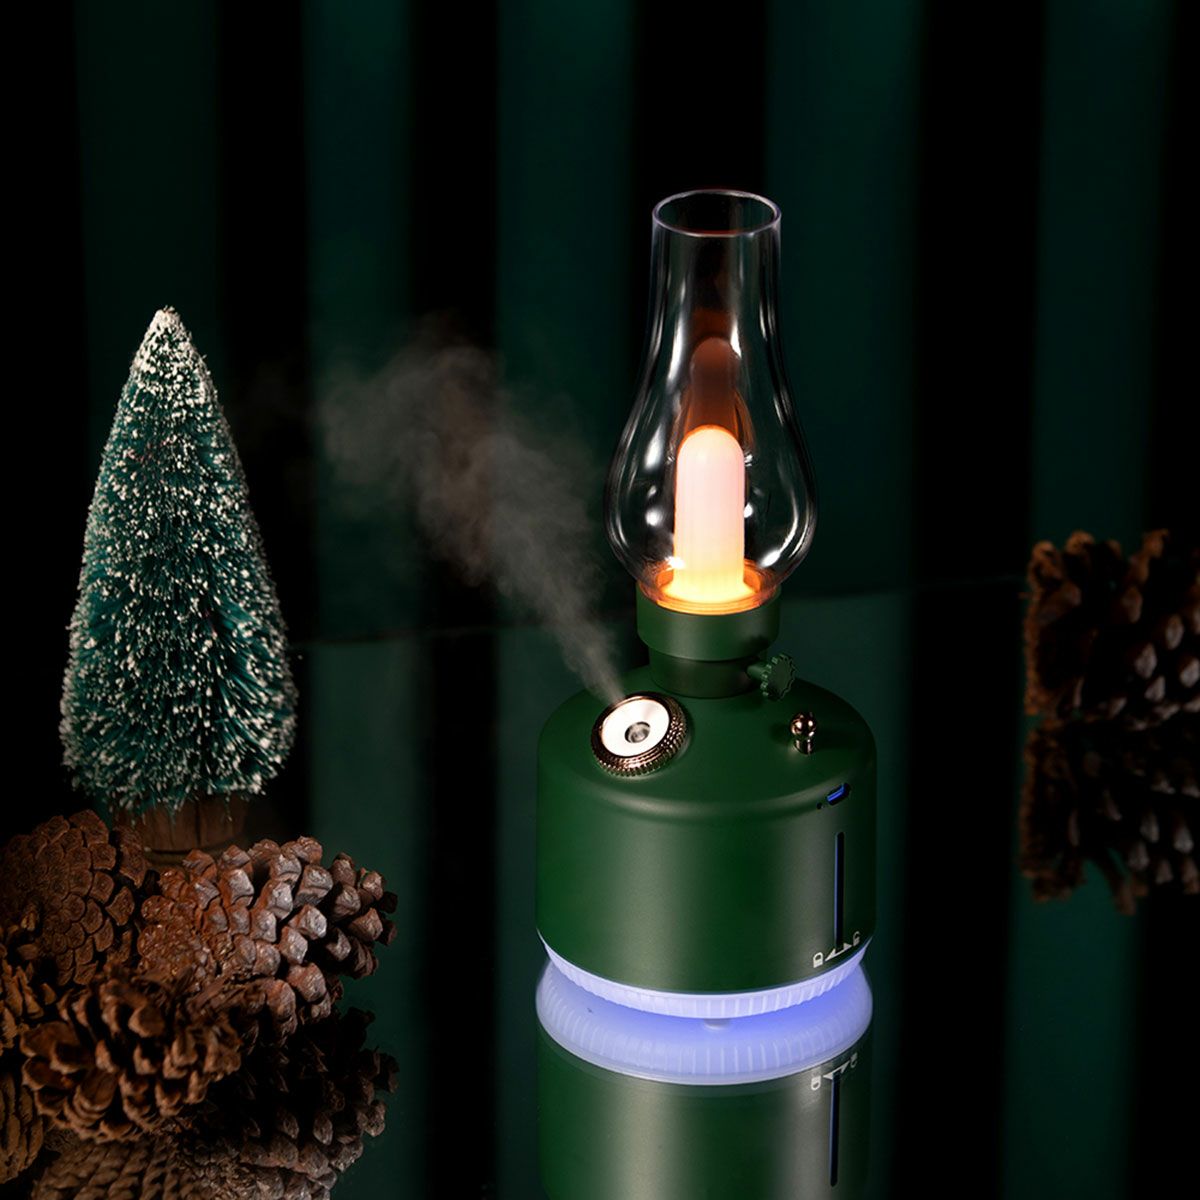 LEDランタン＆ディフューザー 照明 ランプ ランタン 卓上加湿器 ディフューザー 調光可能 加湿 ミスト 乾燥 アウトドア インテリア キャンプ 室内 パーティー クリスマス スタンド bcl